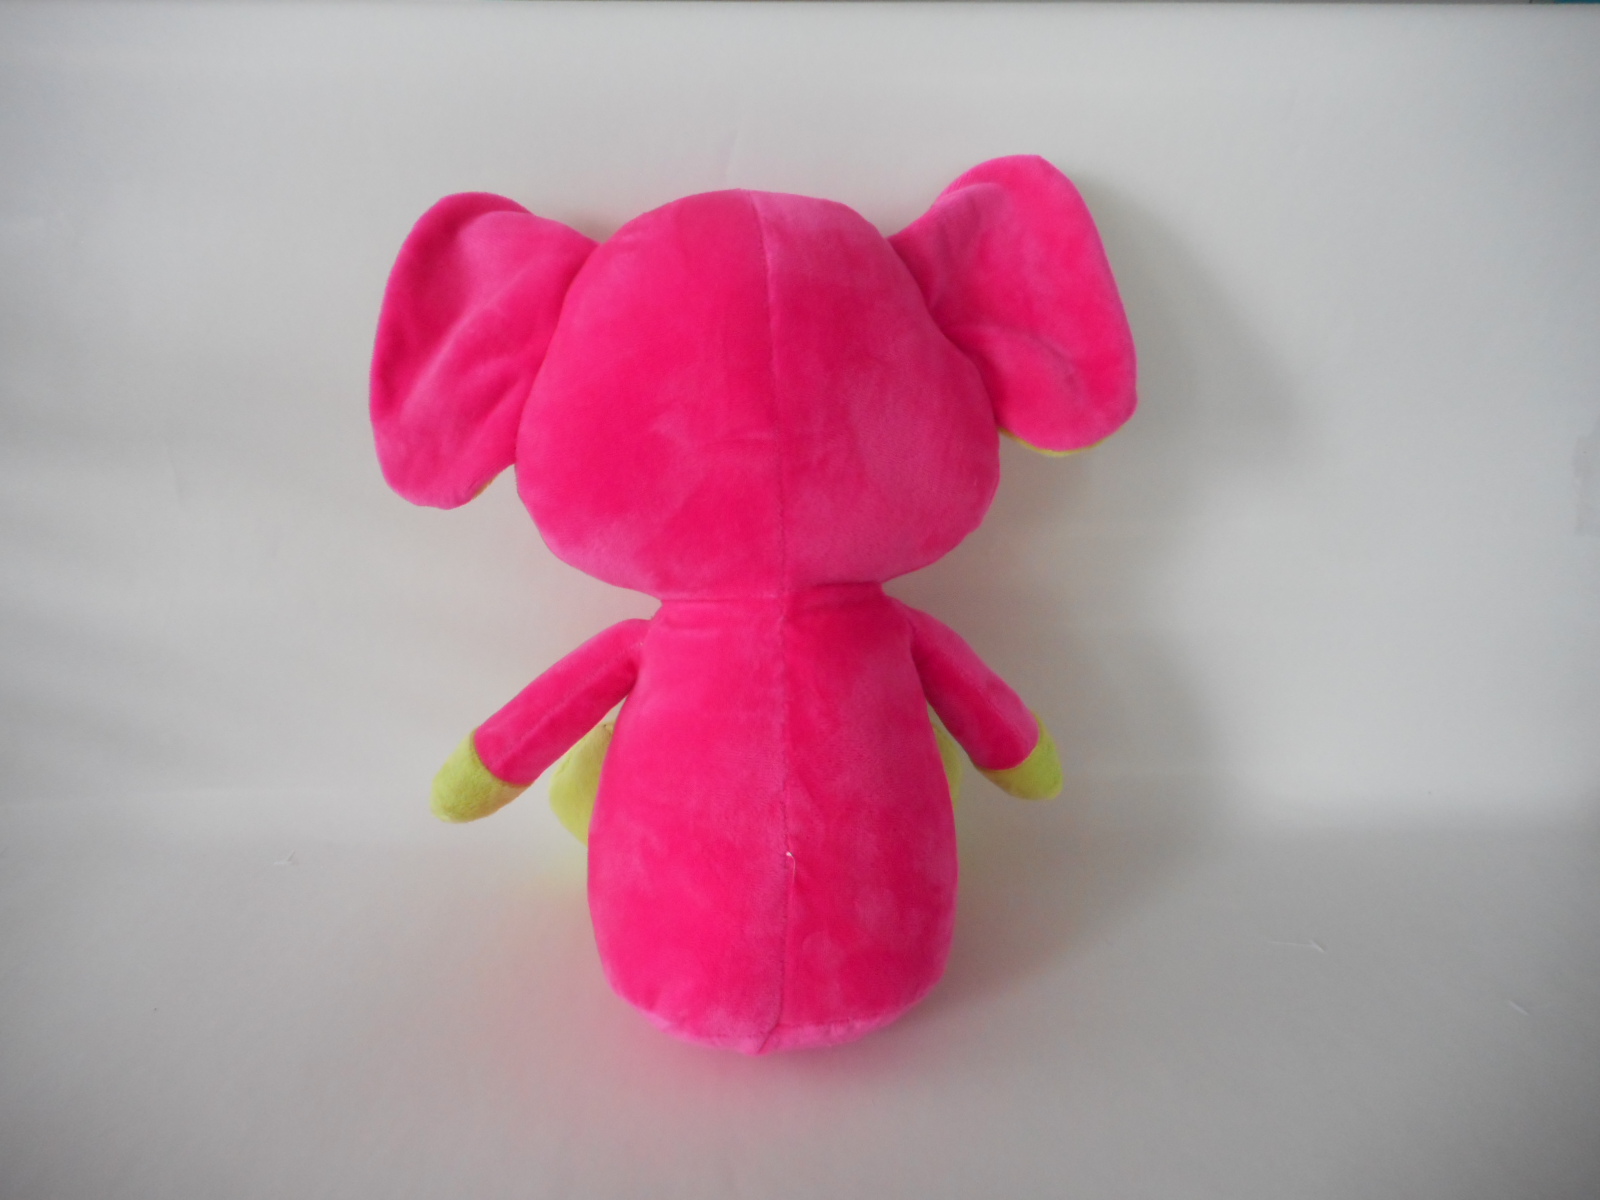 Cute Cartoon 3D Big Eyes Pink Elephant Plush Toy